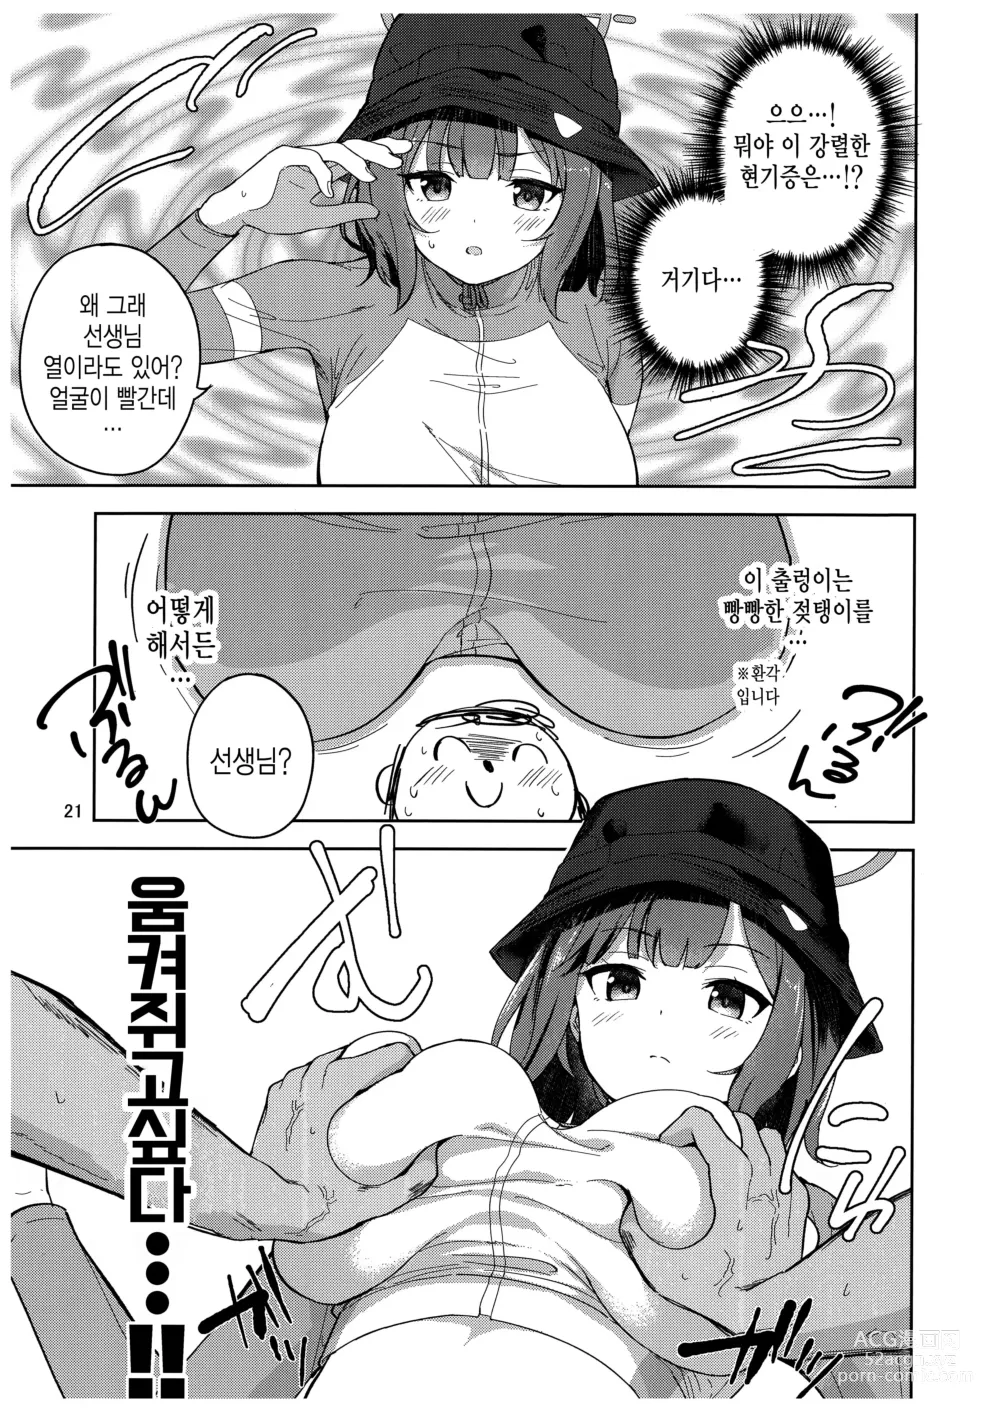 Page 22 of doujinshi 토끼와 나의 표류일기